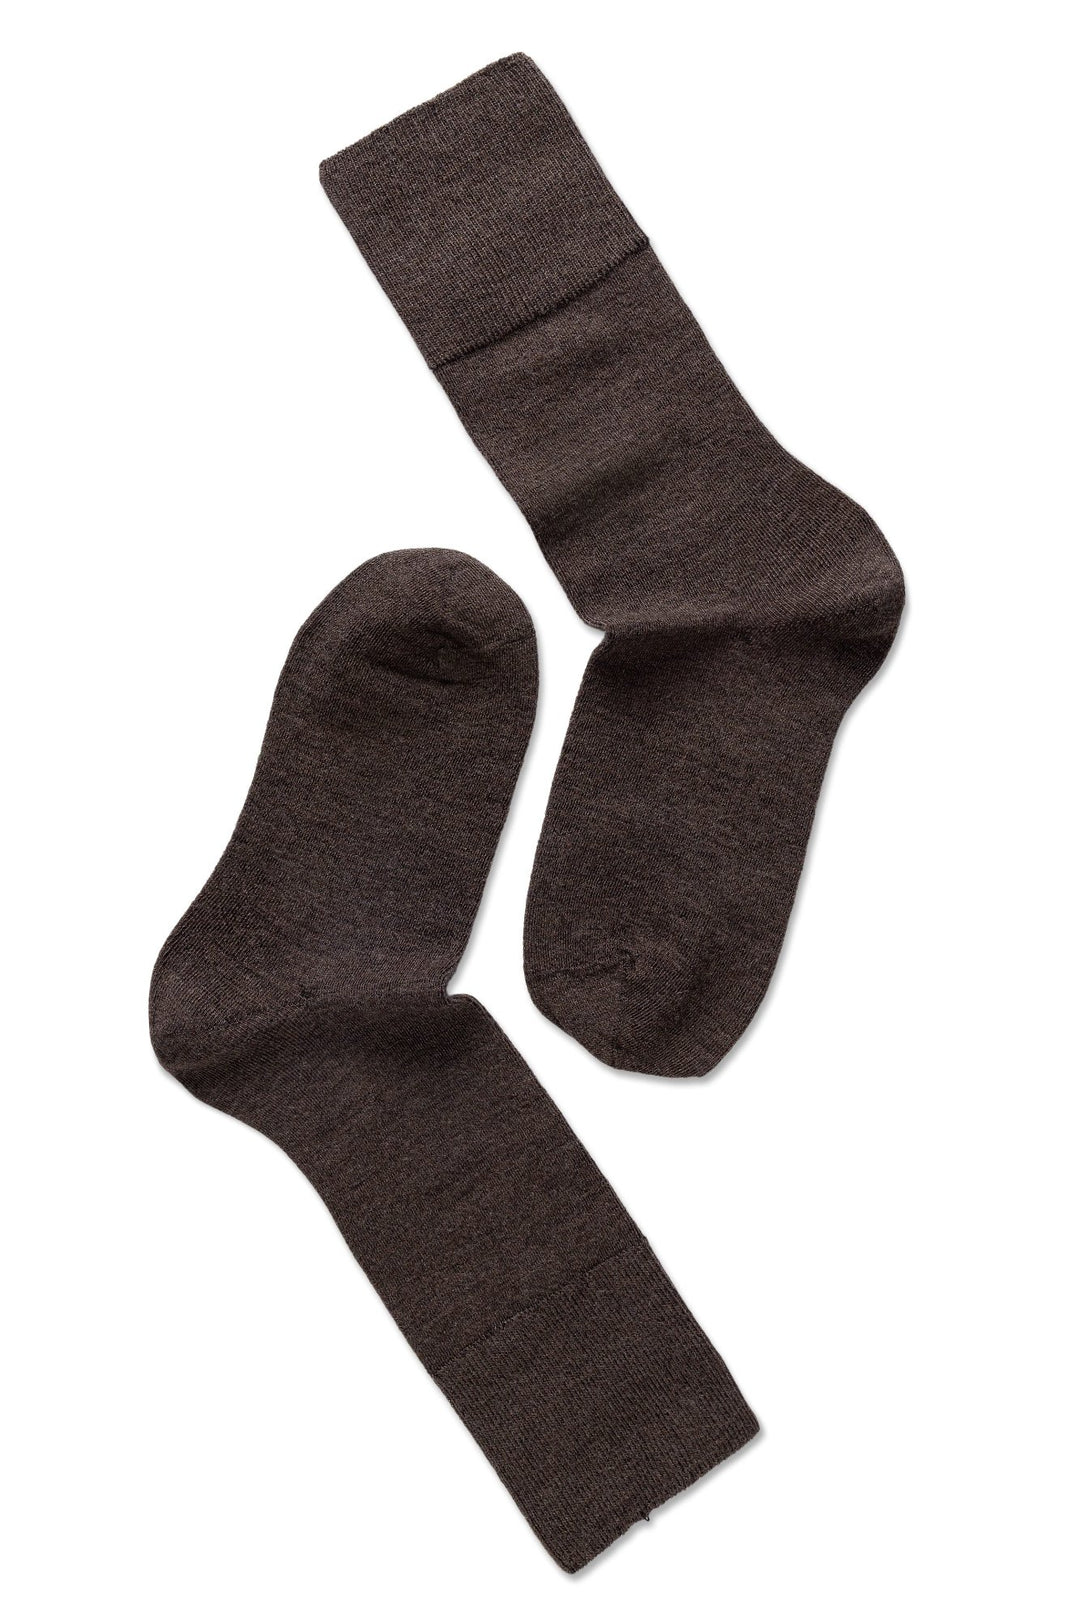 Uldstrømper | Note by Syversen Fine wool comfort top, brown melange